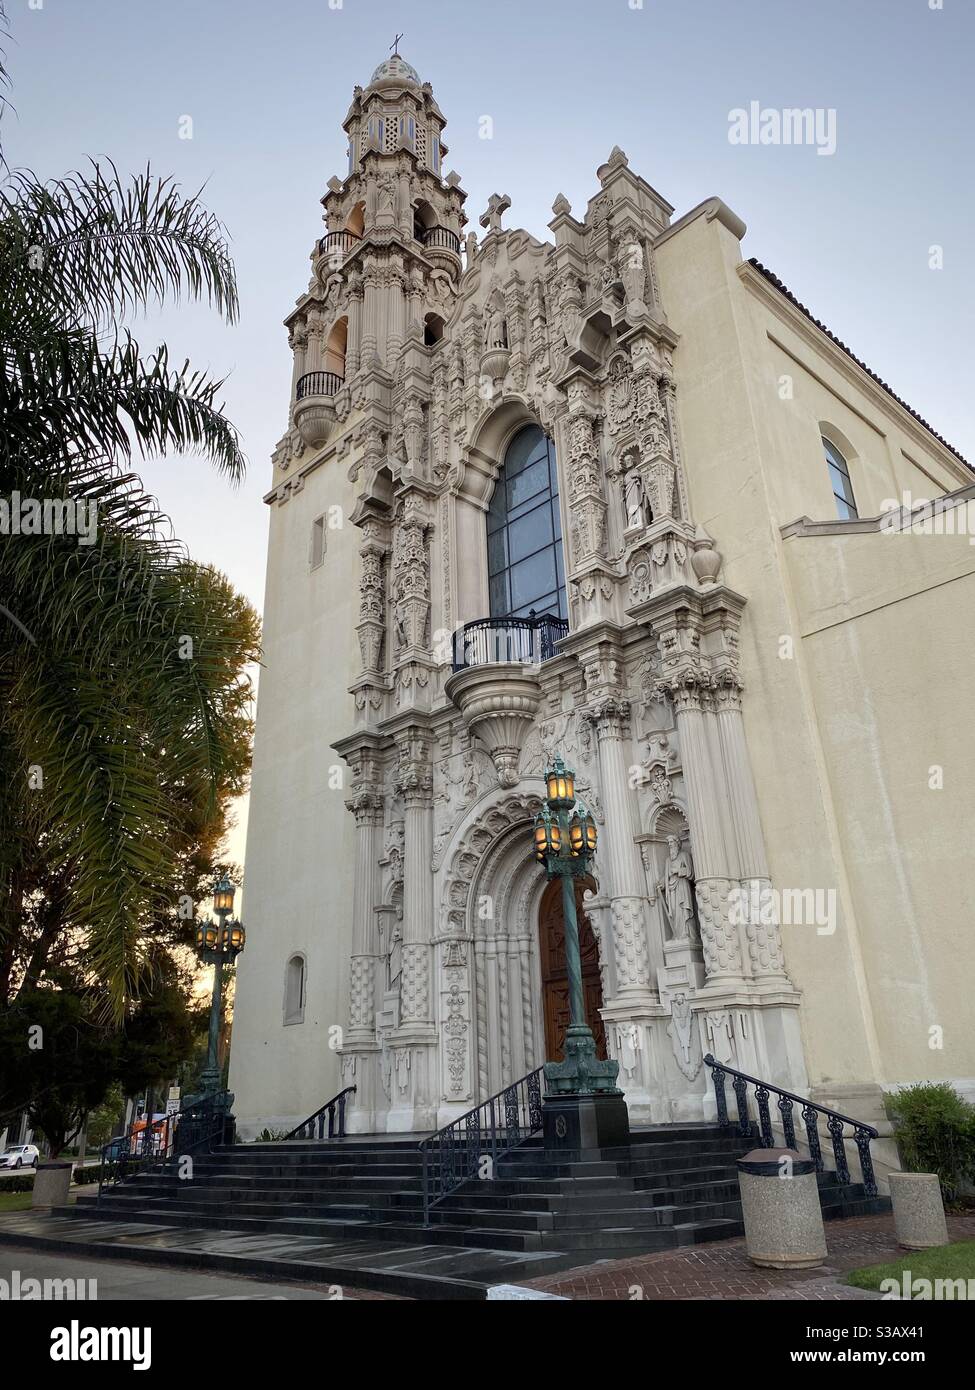 LOS ANGELES, CA, JUL 2020: St Vincent De Paul Catholic Church, near University of Southern California, Exposition Park, and Downtown LA. Stock Photo